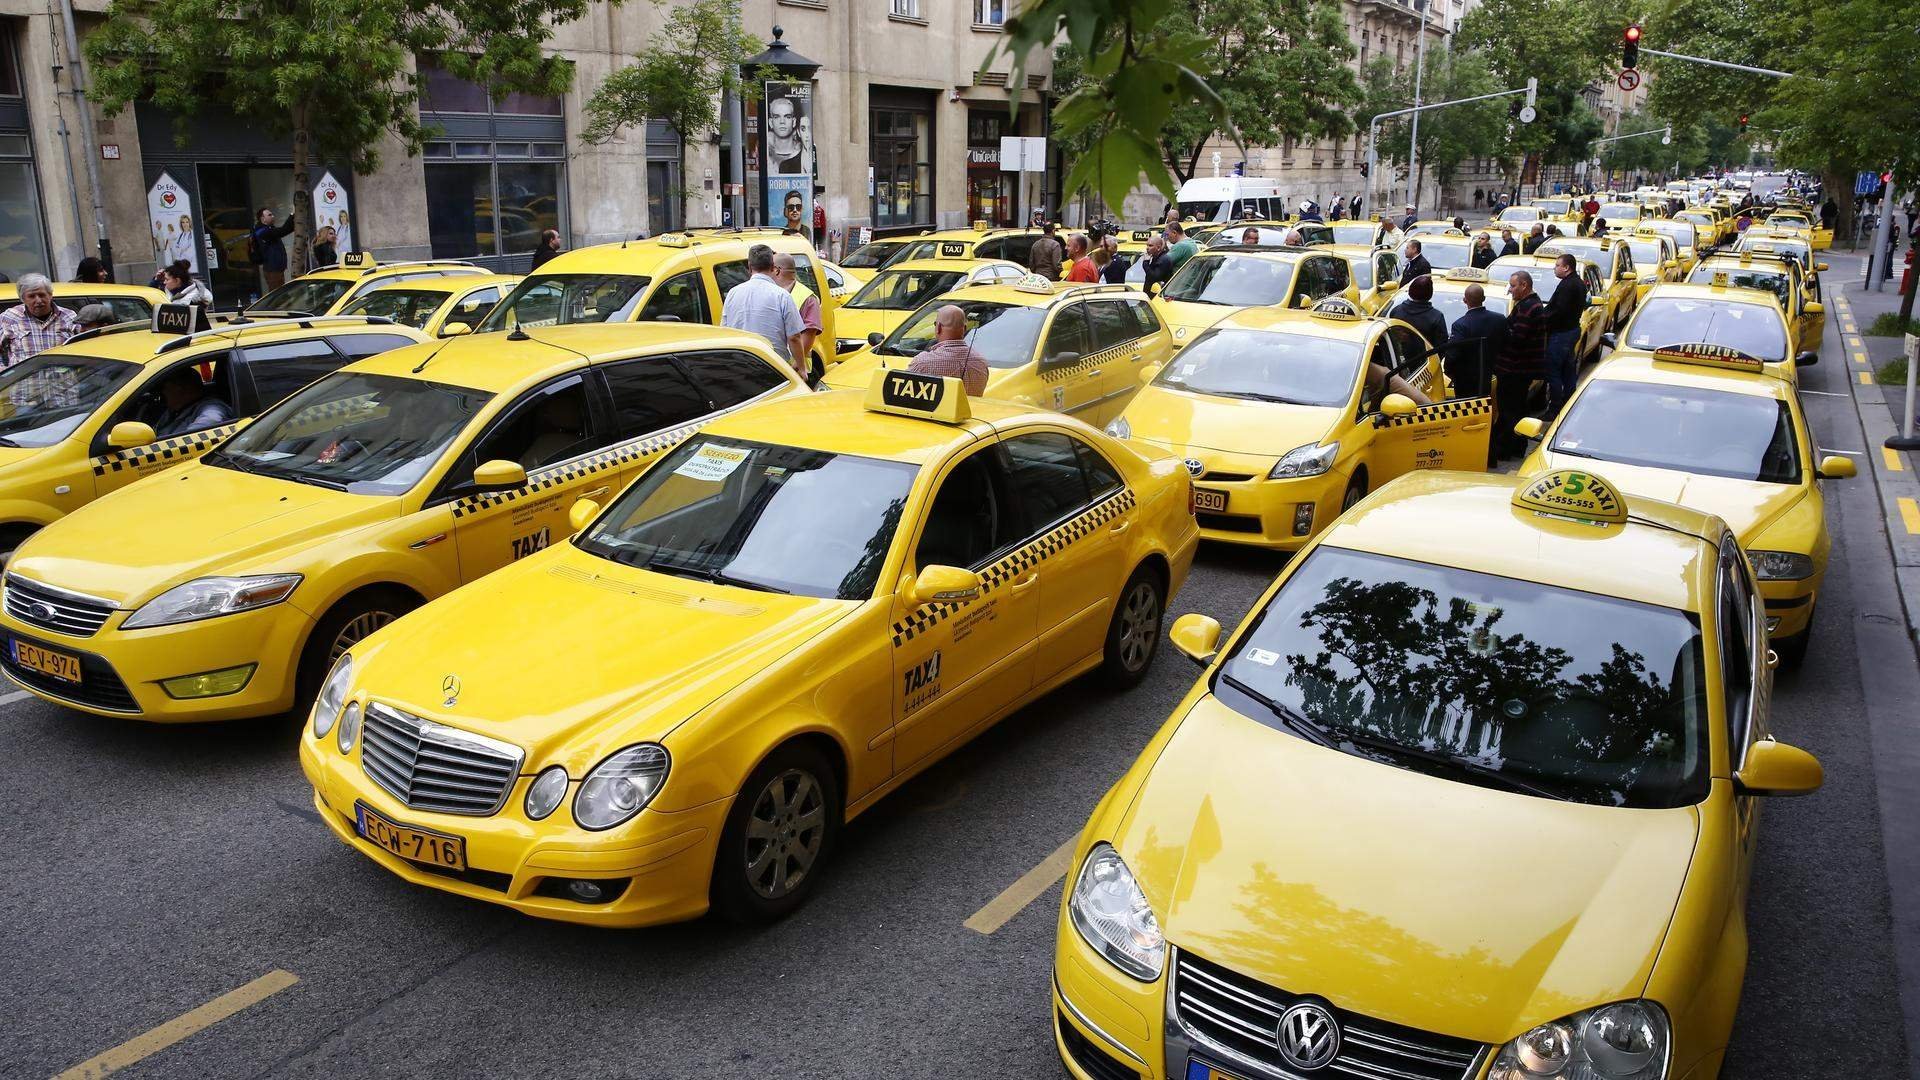 Лизинг авто под такси. Лизинг такси. Такси фото. Желтая машина такси. Лизинг авто для такси.